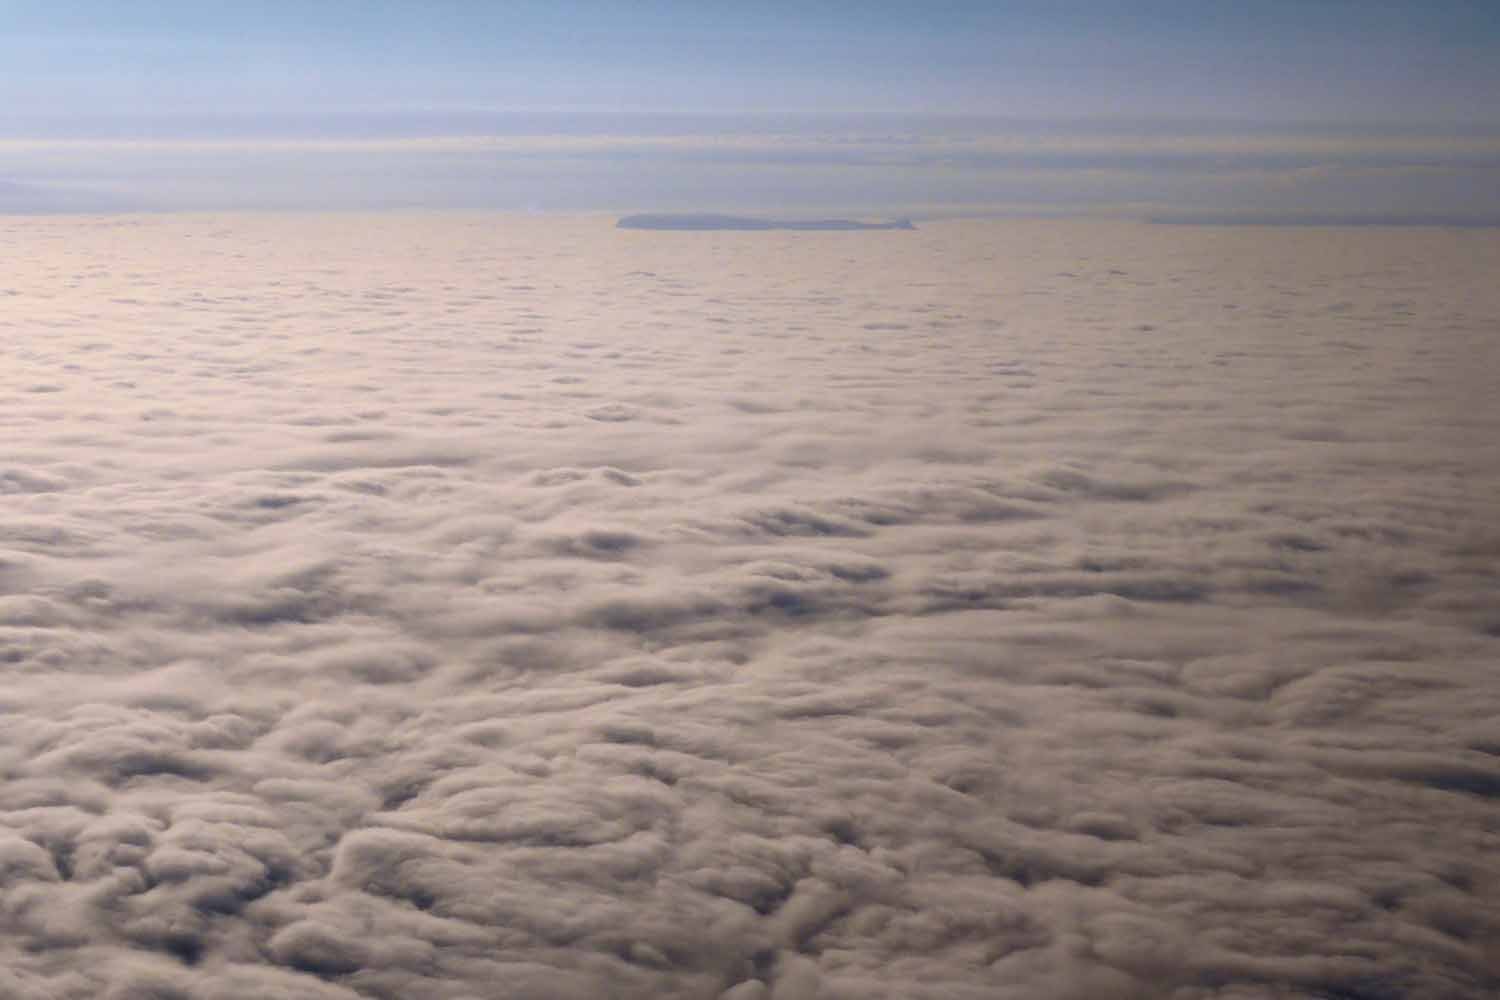 Icelandic mountains poking through the cloud layer